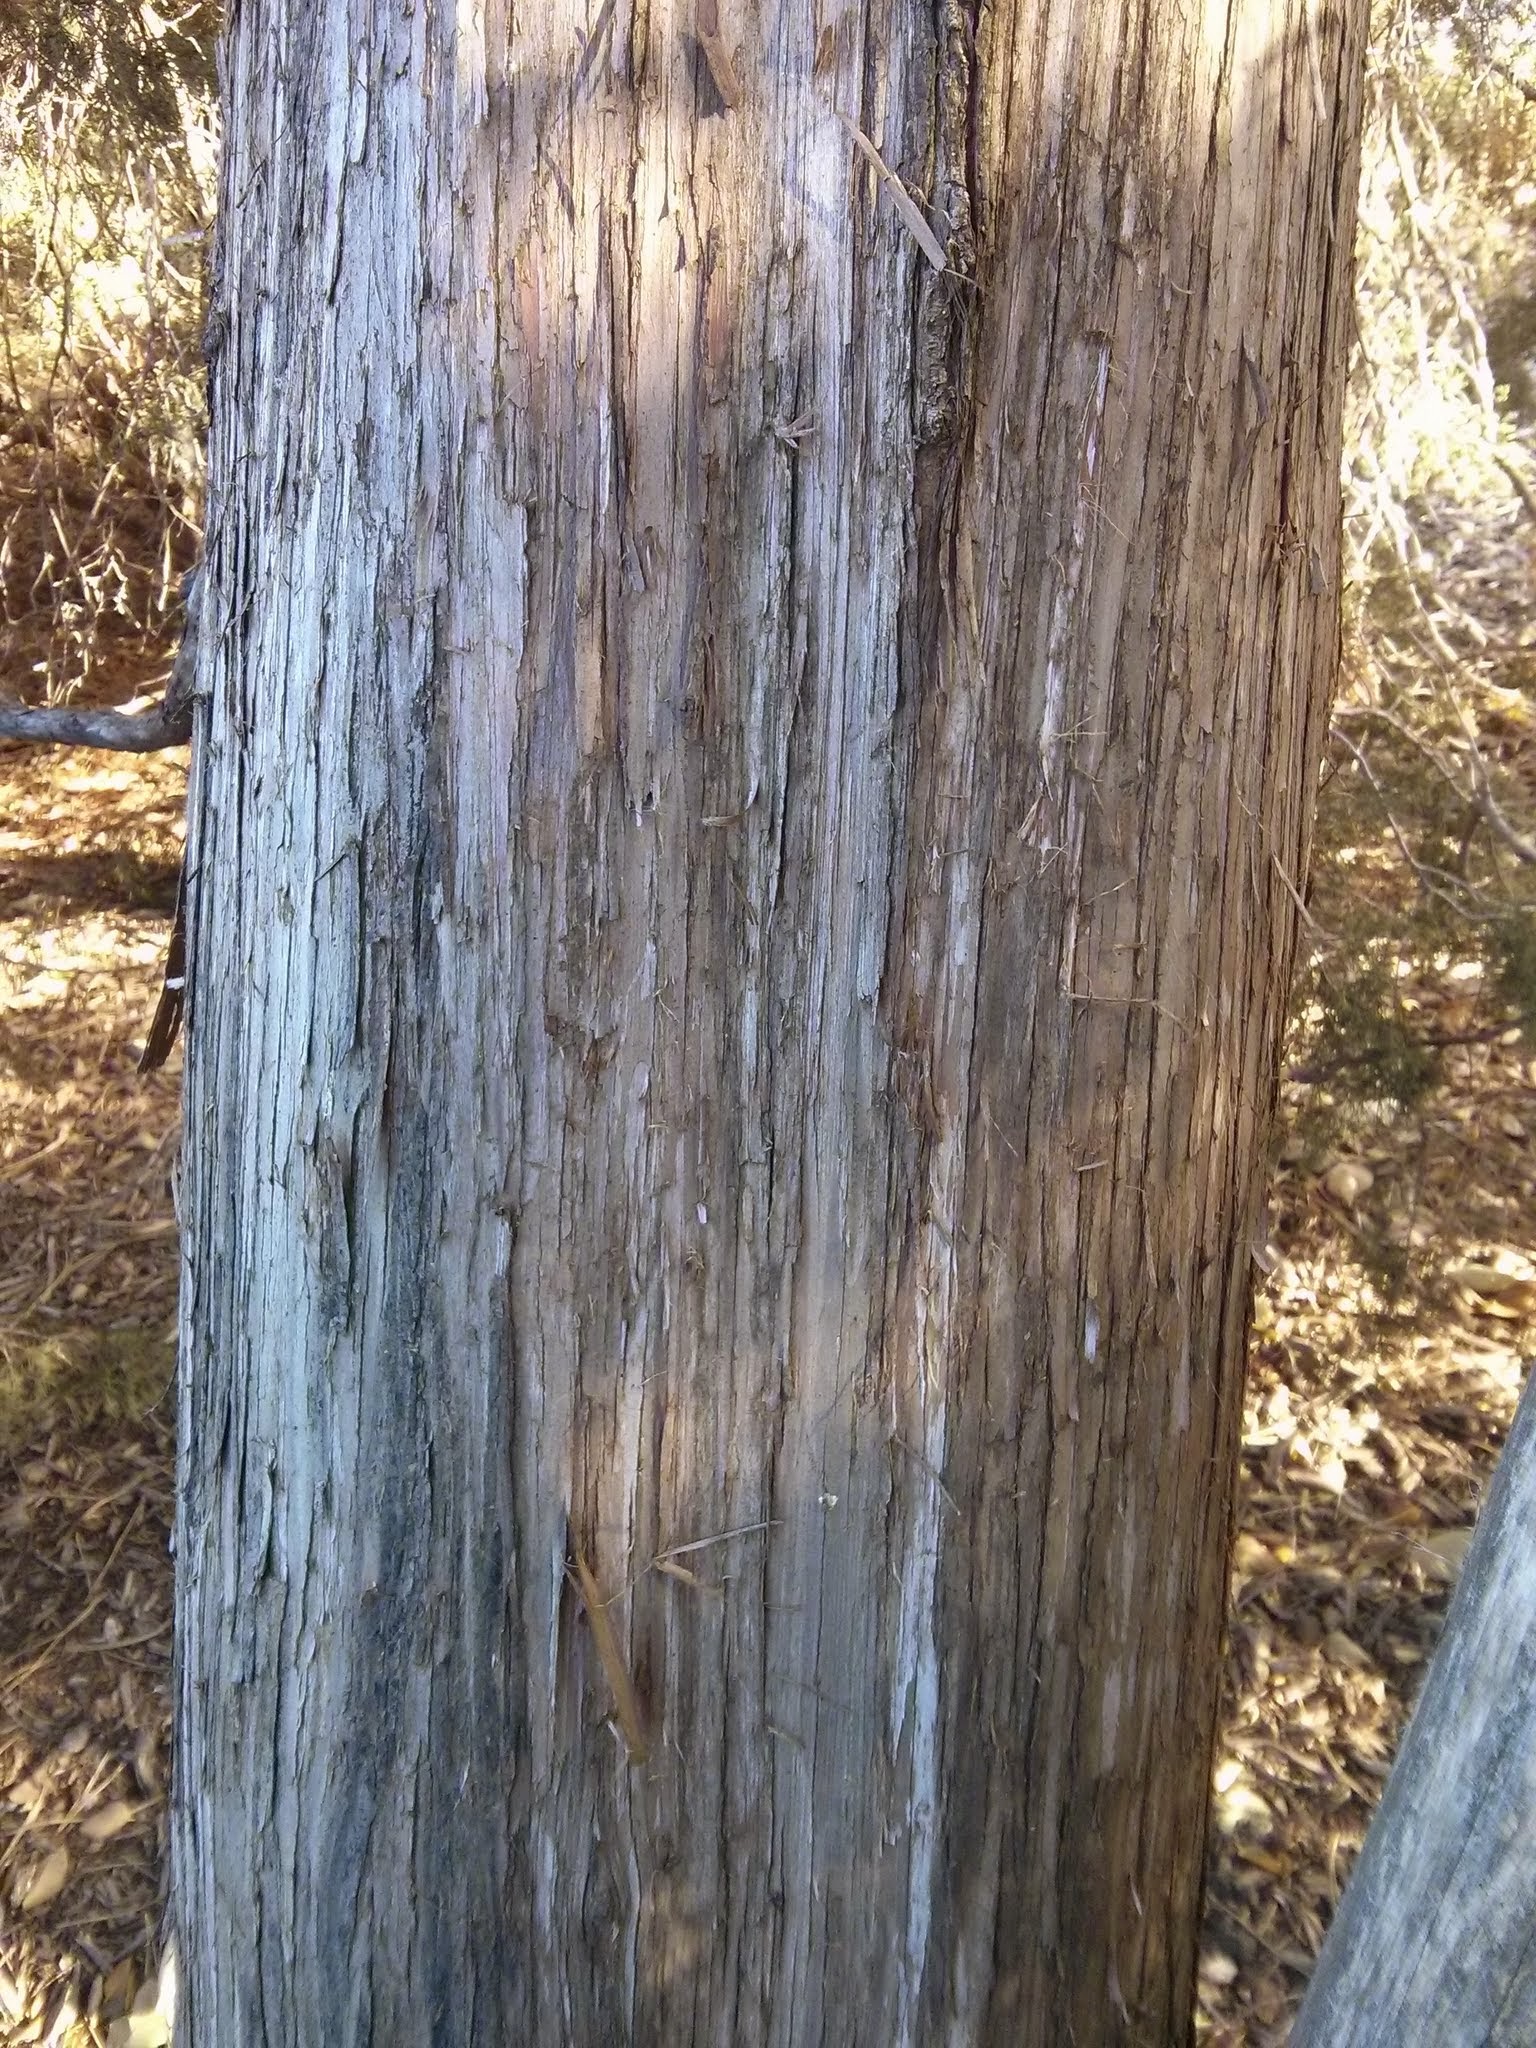 eastern red cedar bark